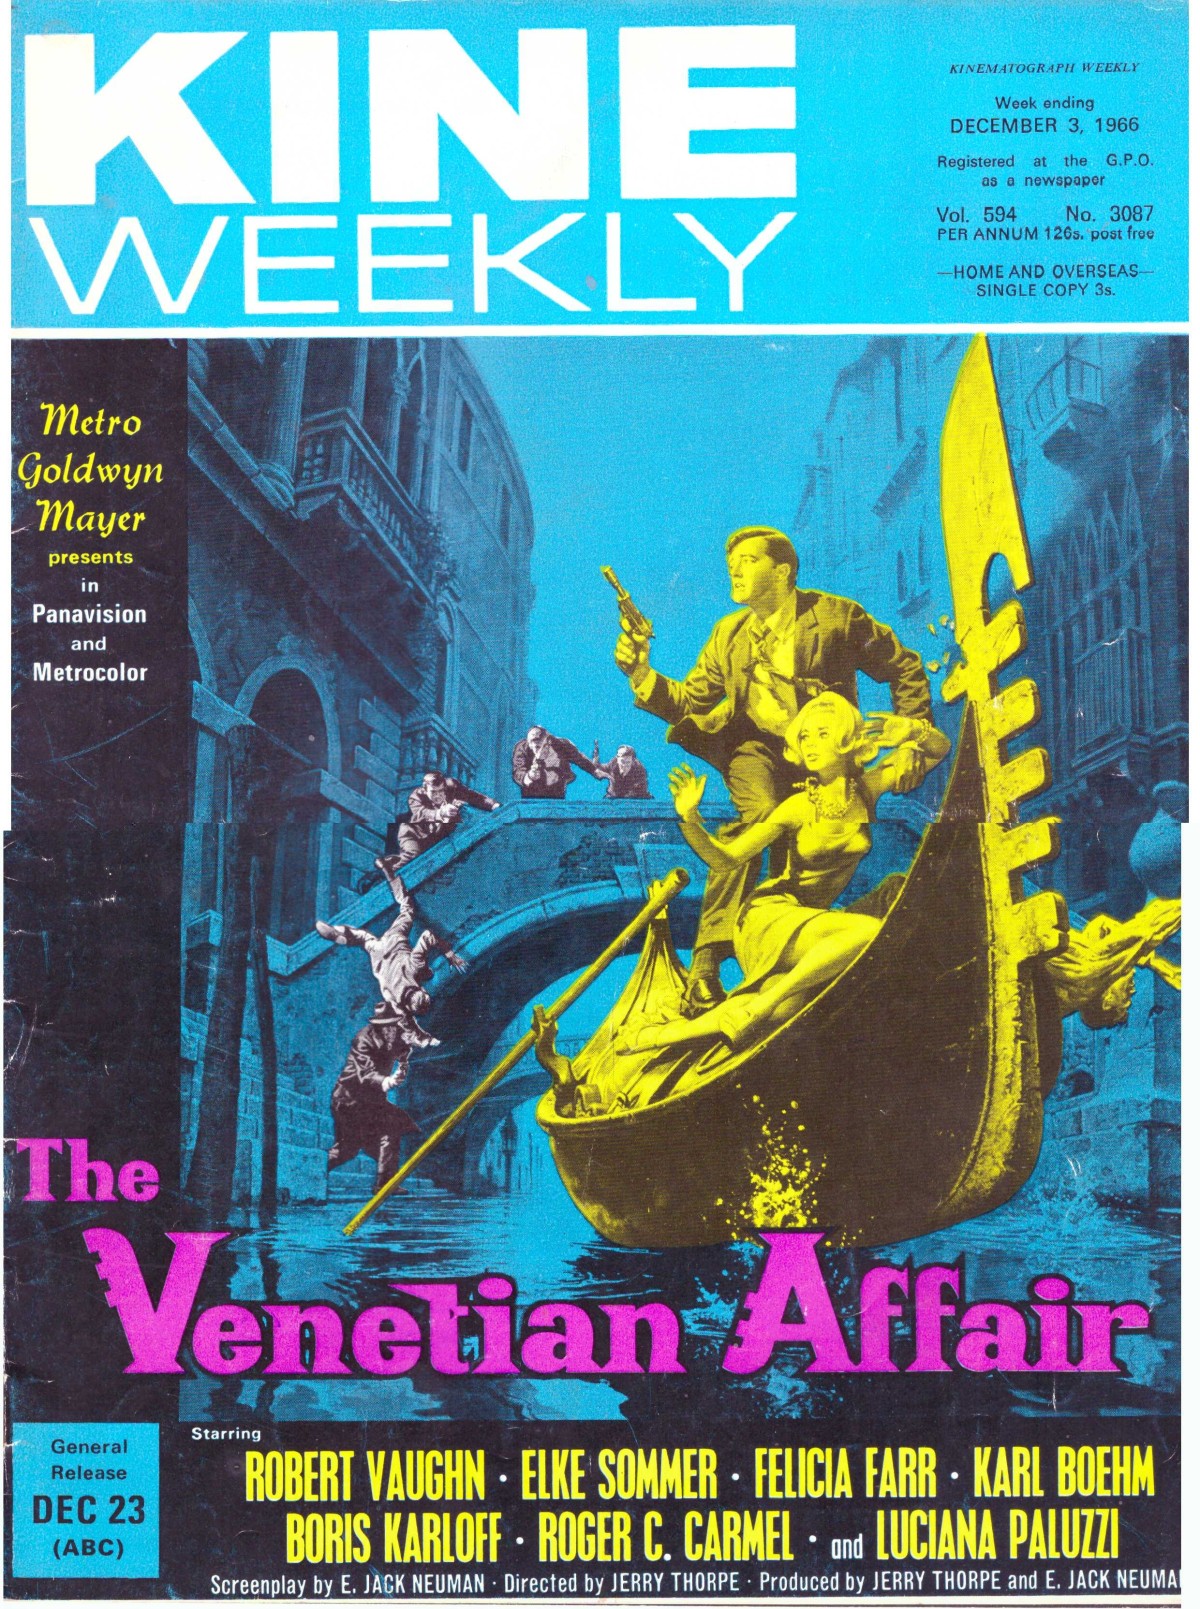 The Venetian Affair (1966) ****